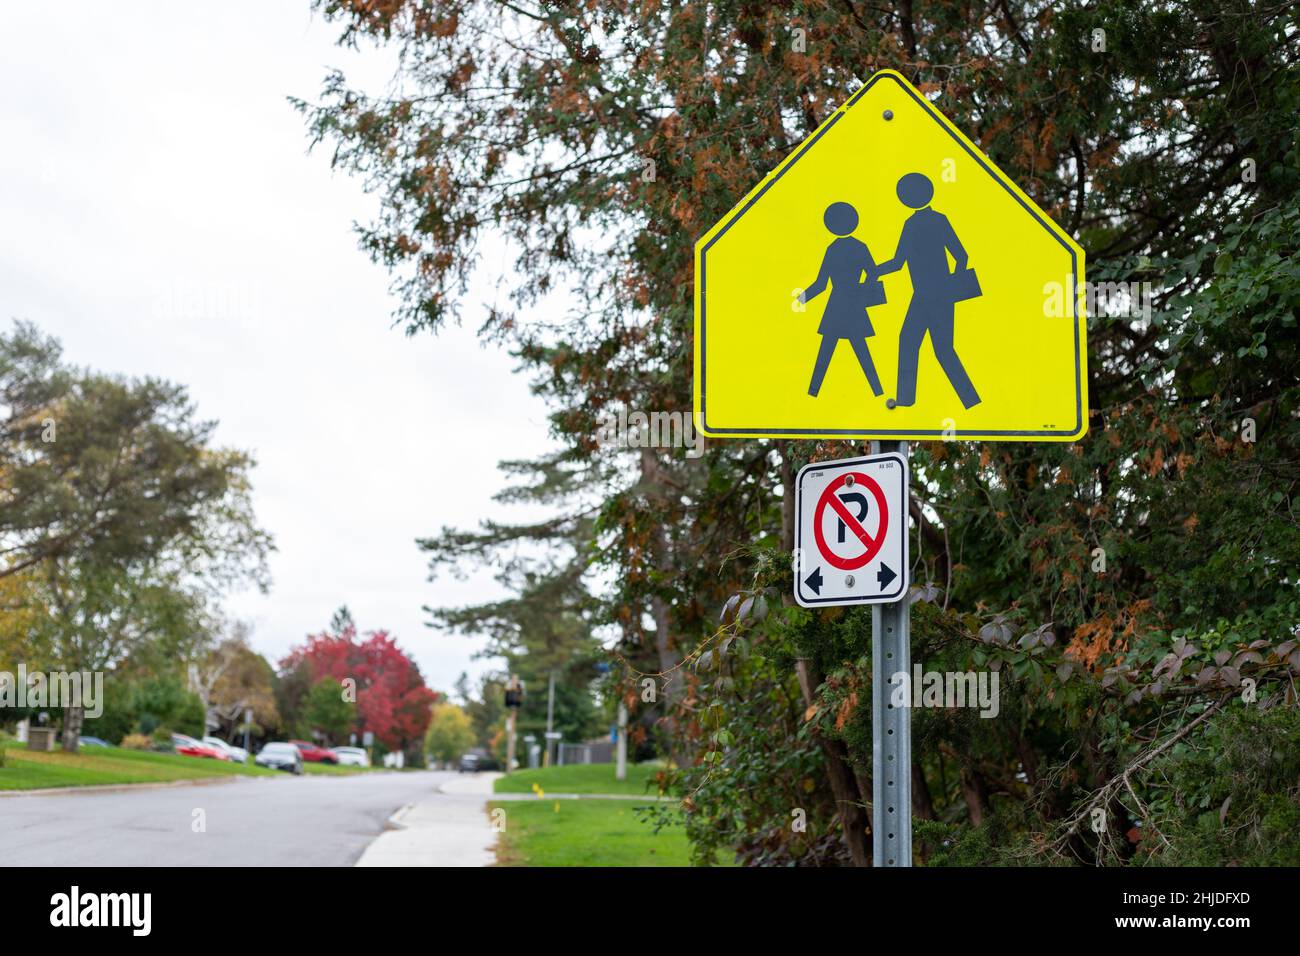 Ottawa, Canada - October 10, 2021: Yellow school crossing ahead sign on the road near school zone Stock Photo